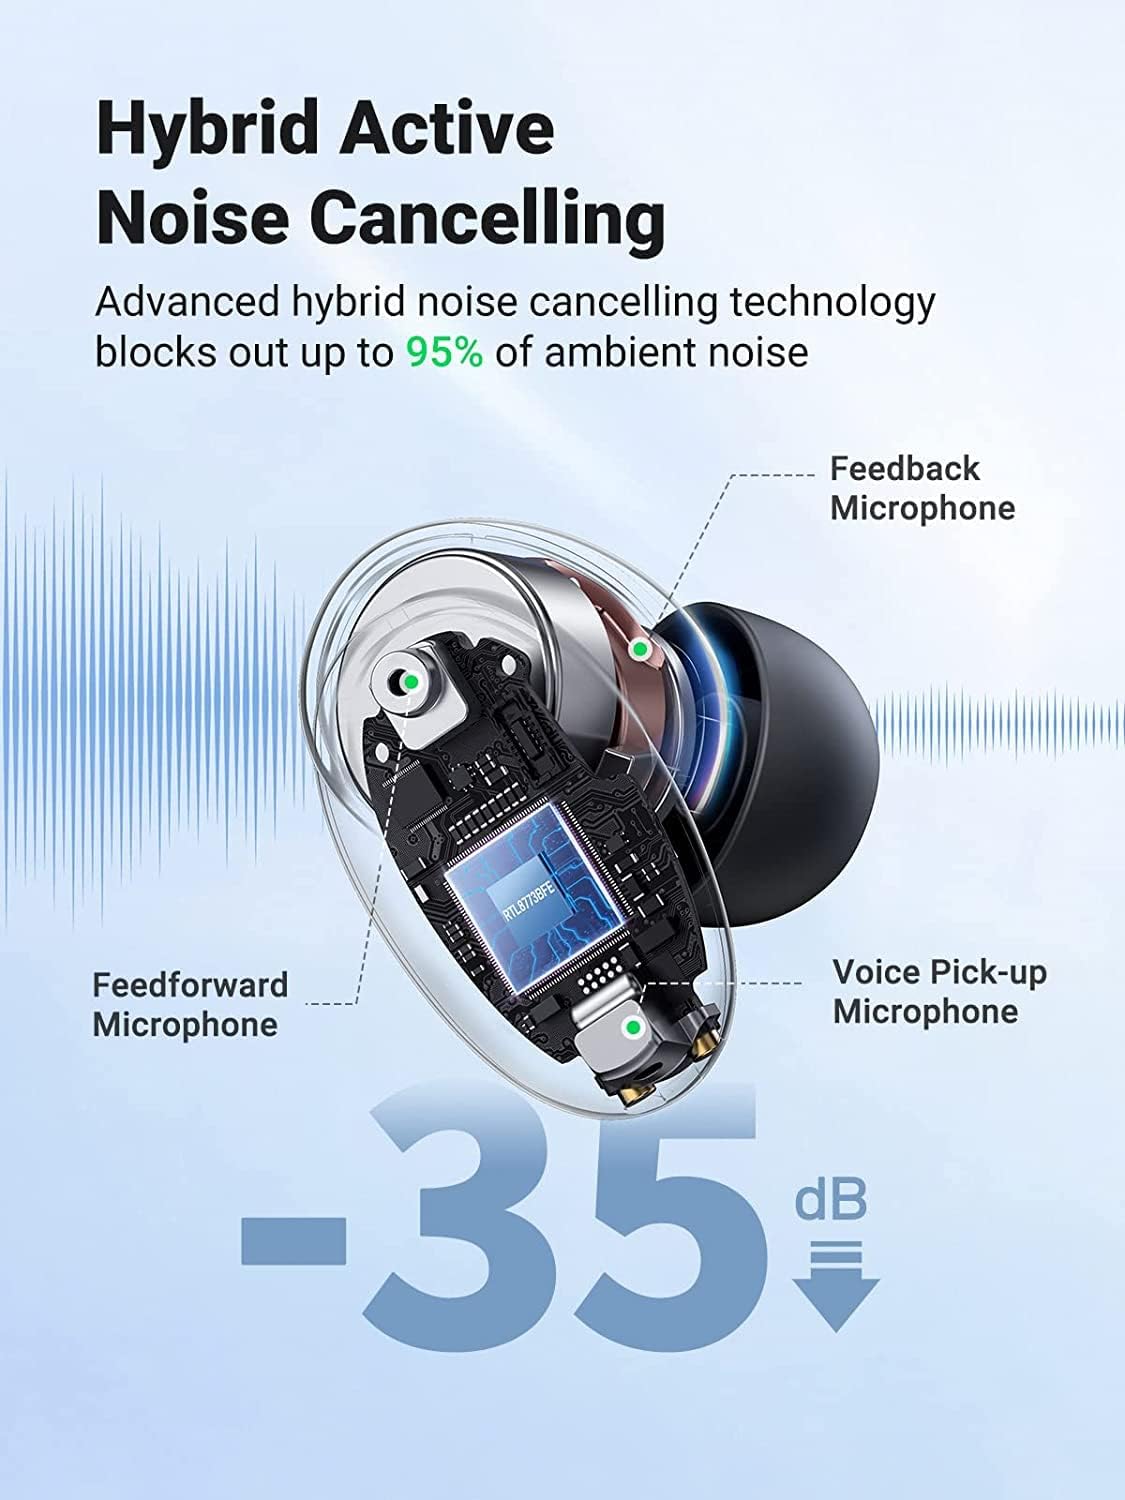 UGreen HiTune X6 Bluetooth 5.1 ANC earbuds - Black